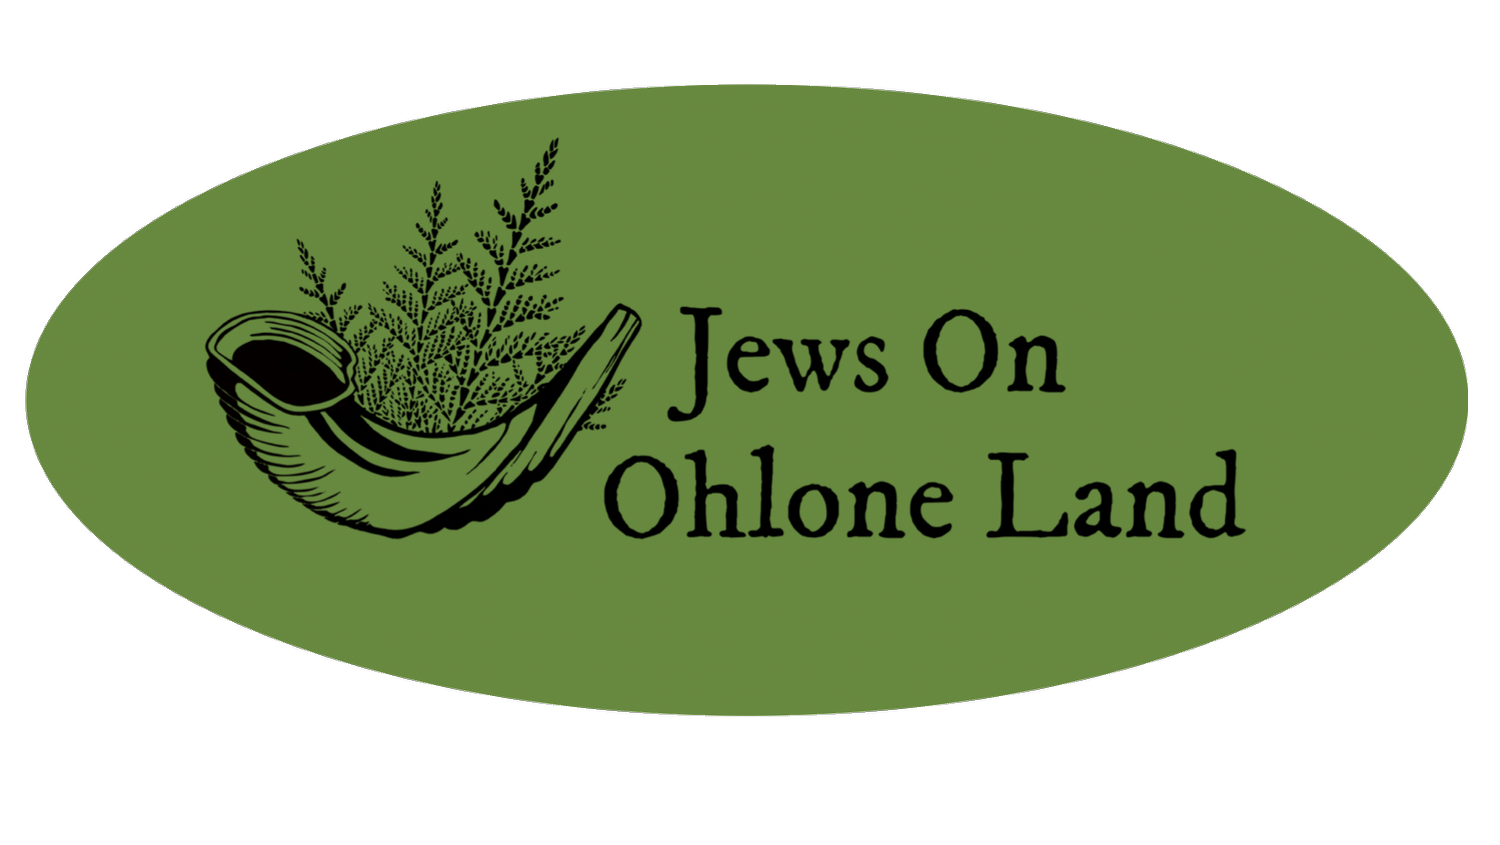 Jews On Ohlone Land